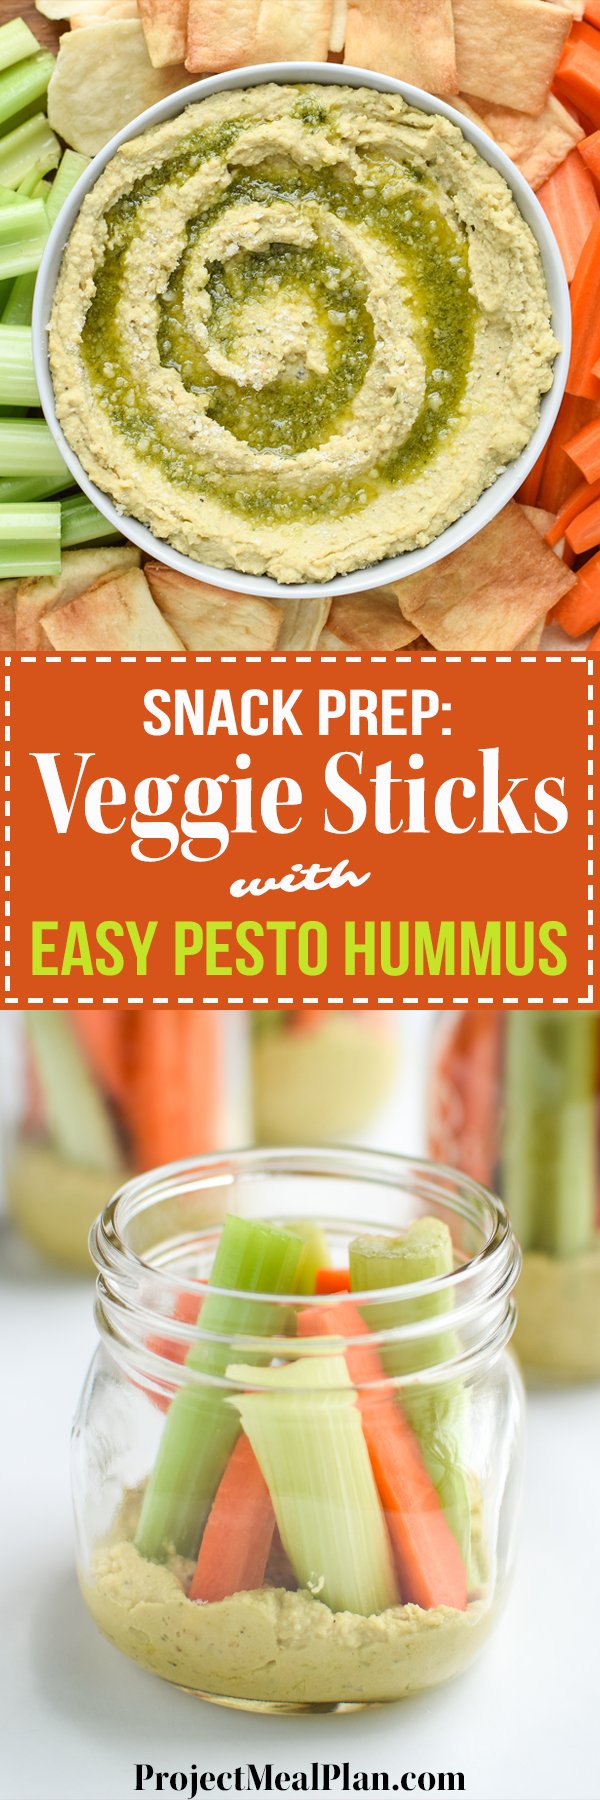 Snack Prep: Veggie Sticks with Easy Pesto Hummus recipe - A pesto twist on the classic hummus, plus, have you tried it with veggies in a mason jar? - ProjectMealPlan.com